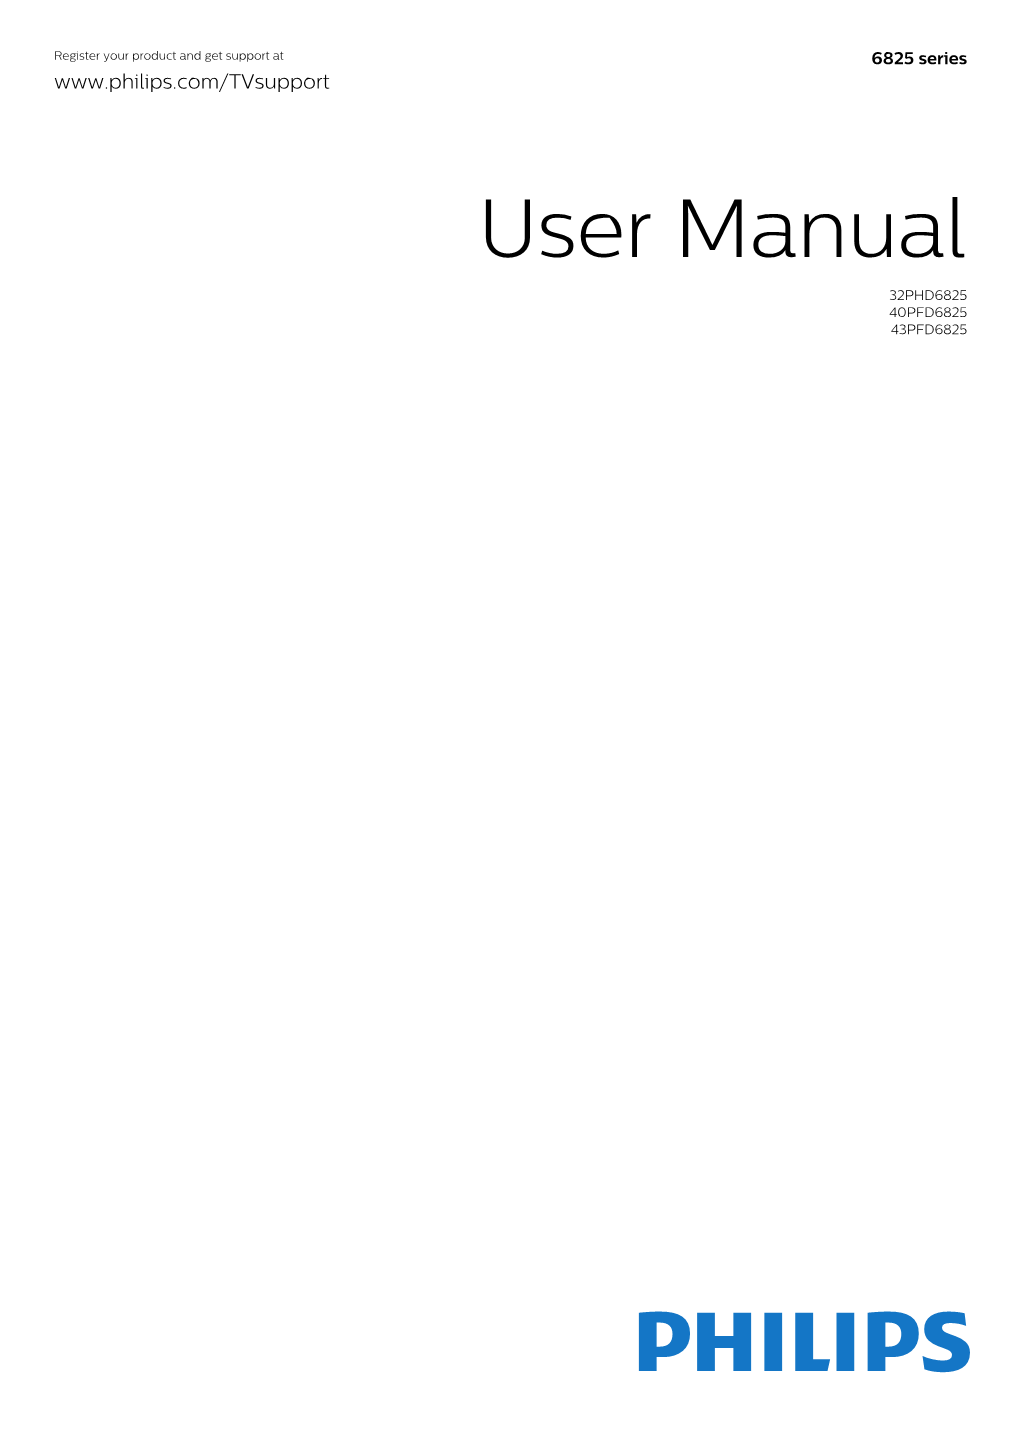 User Manual 32PHD6825 40PFD6825 43PFD6825 Contents